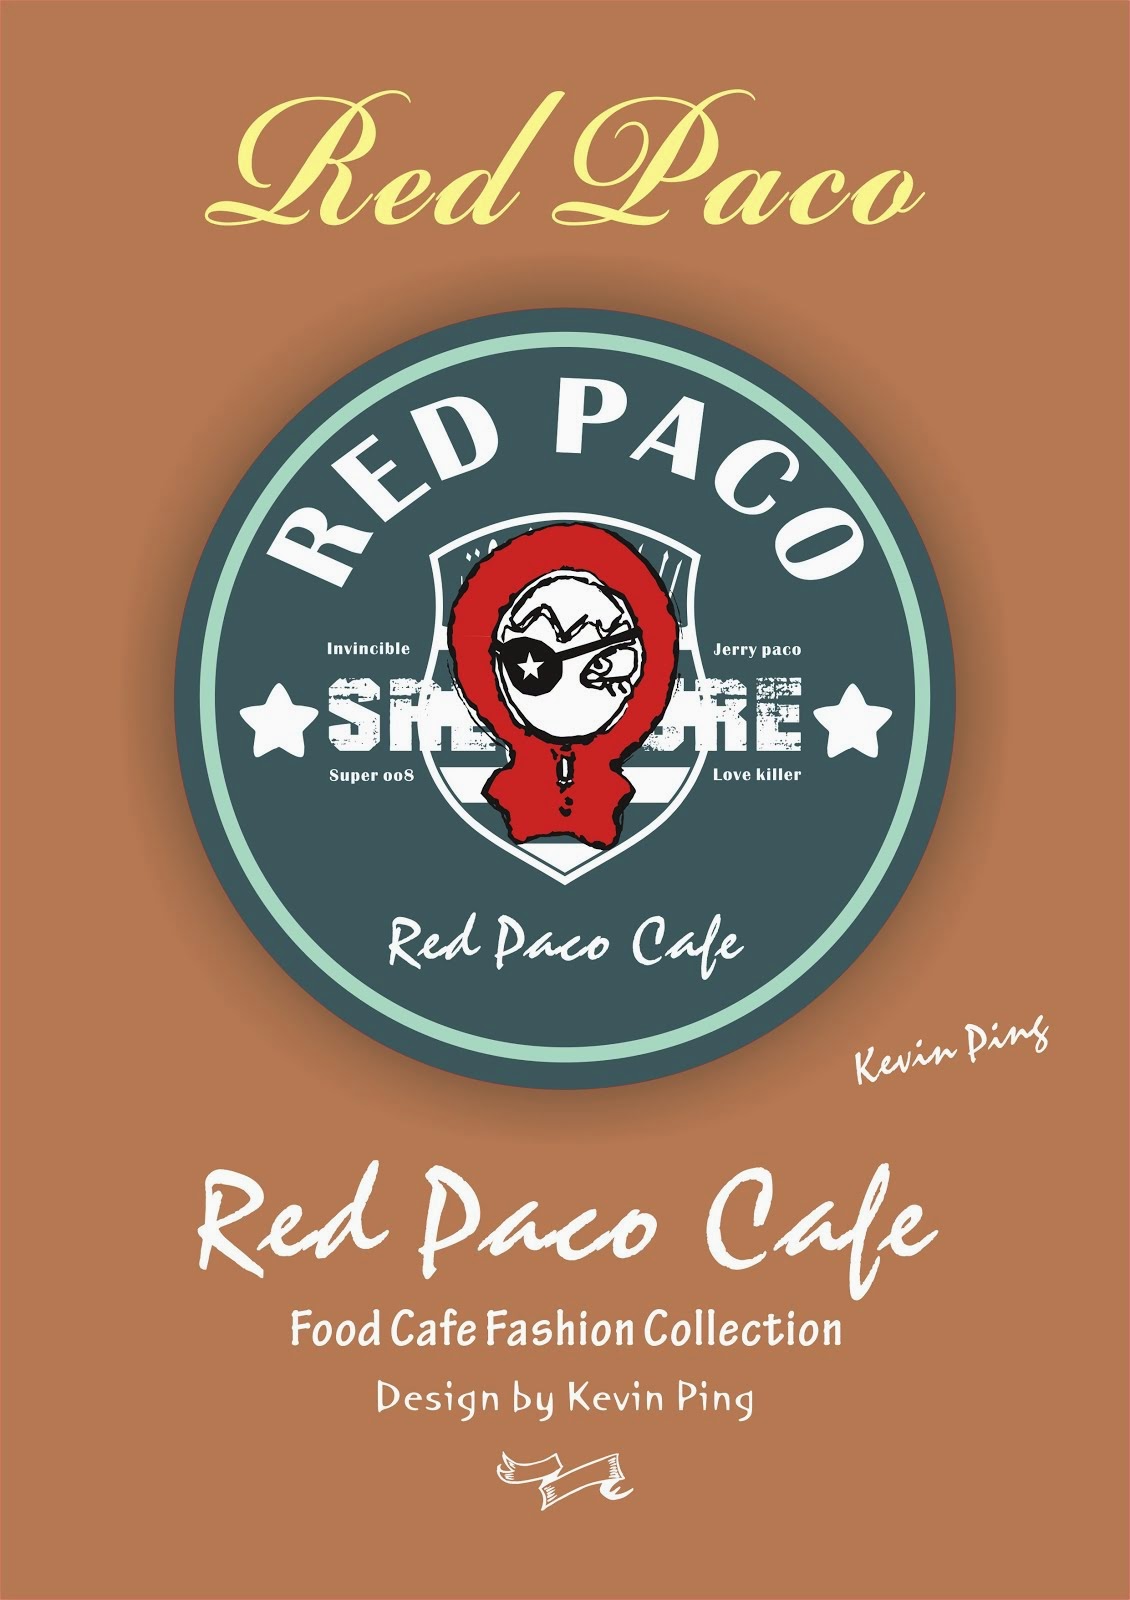 RED PACO CAFE 紅帽客複合式咖啡餐飲時尚連鎖店